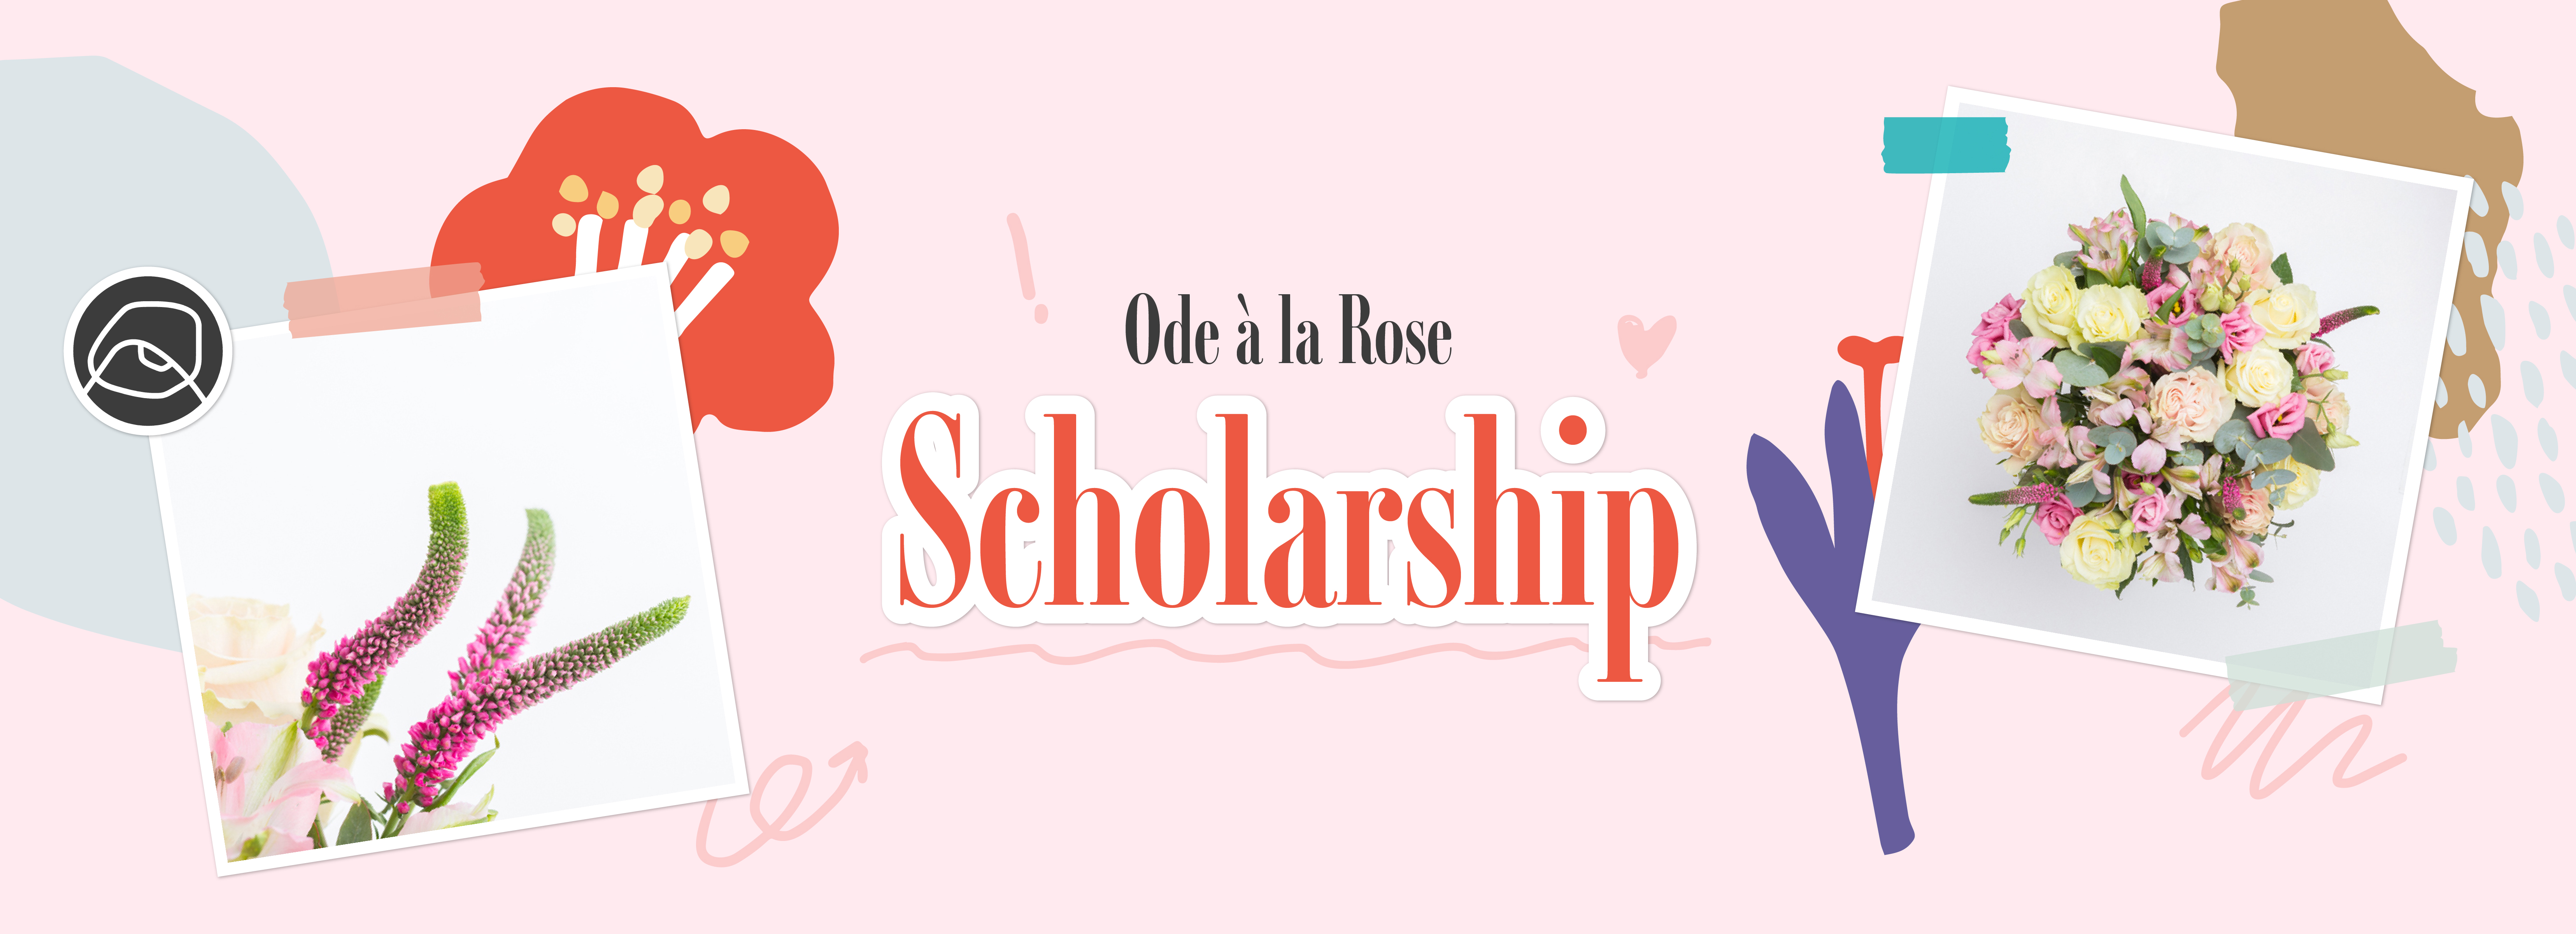 ode a la rose scholarship